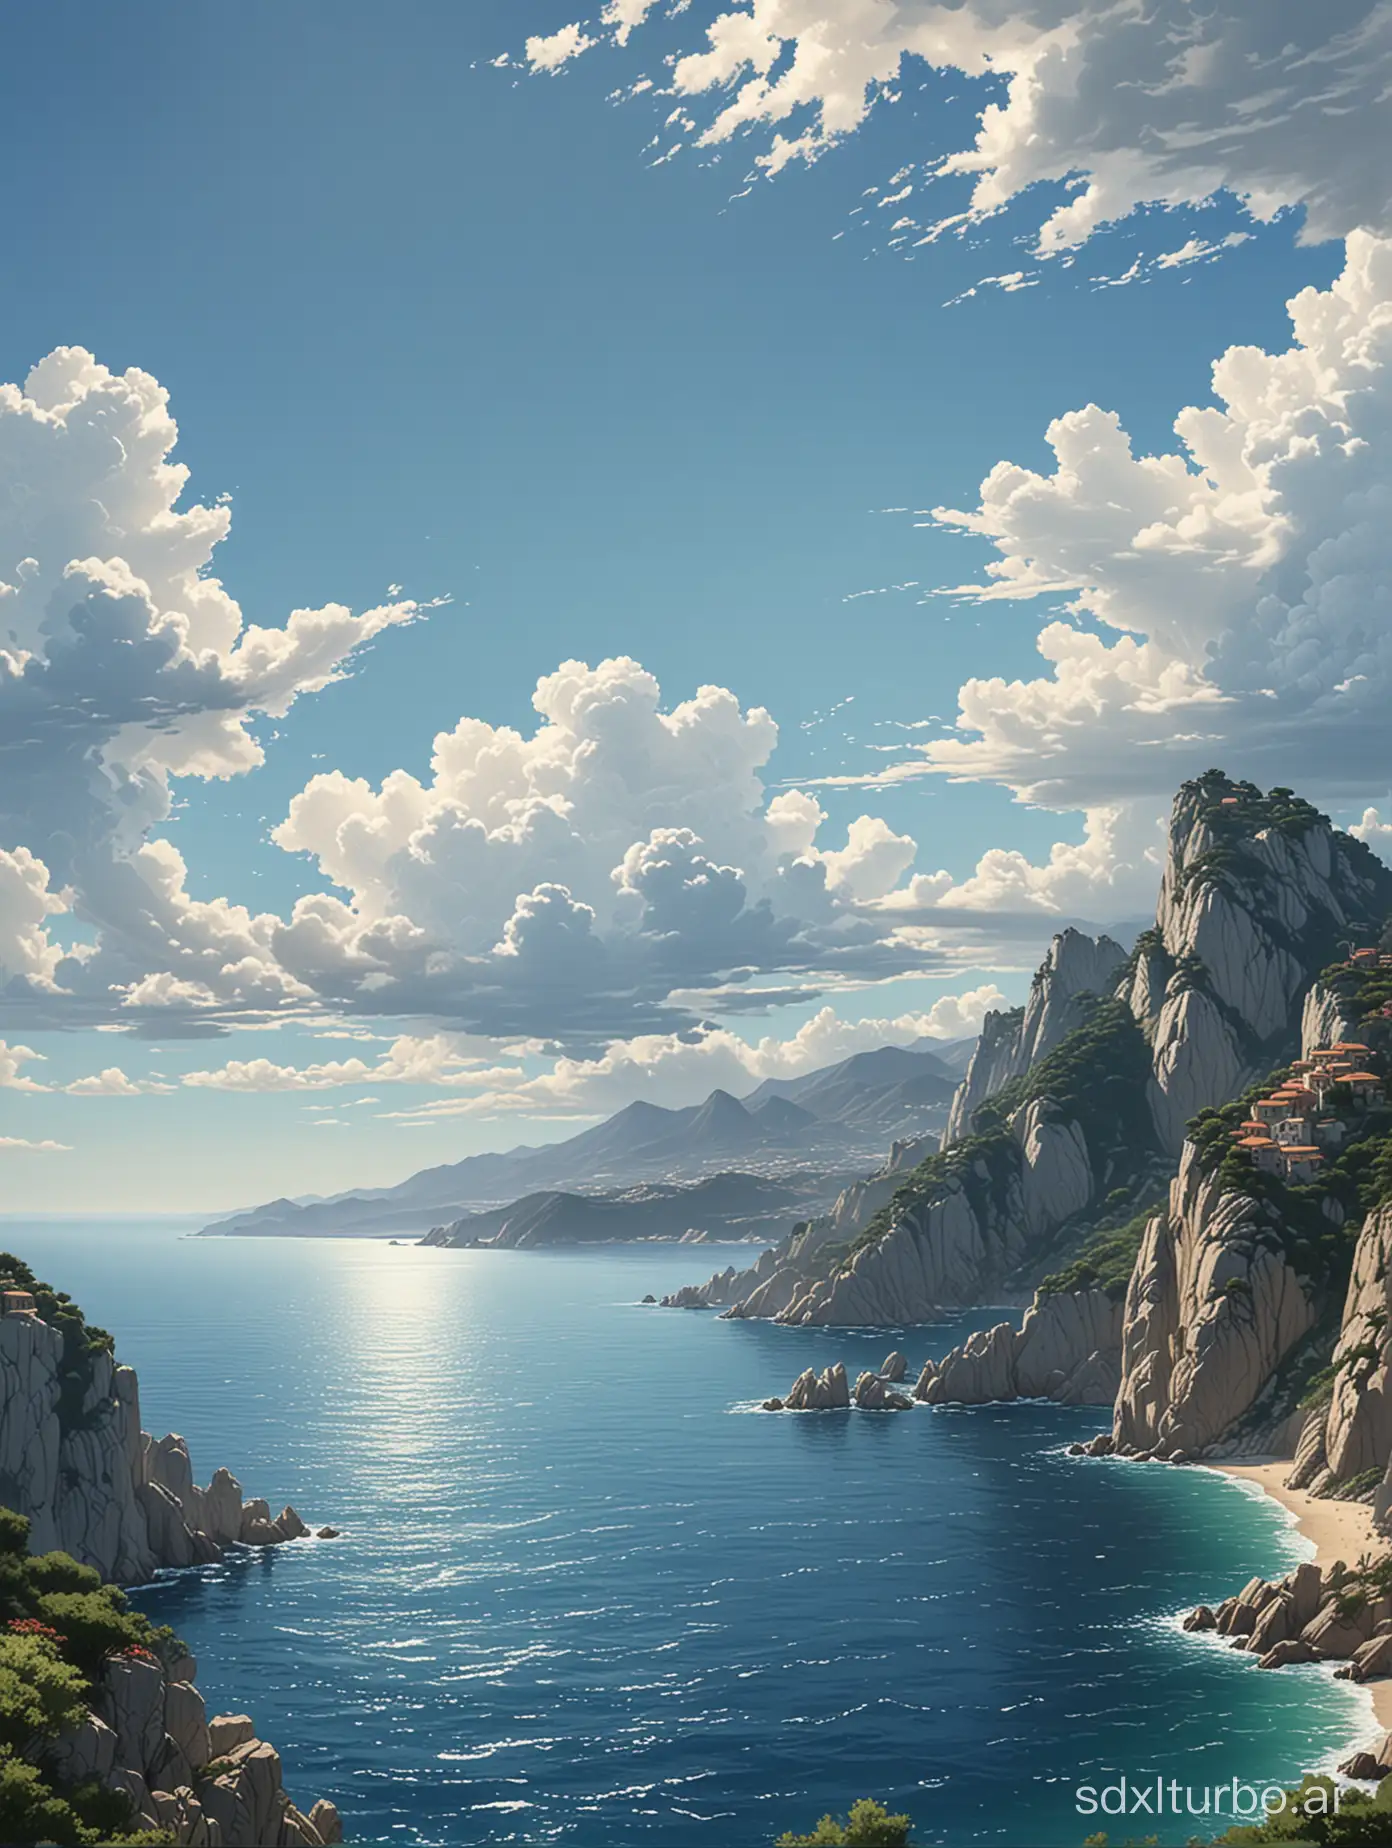 Majestic-Mediterranean-Mountains-Studio-Ghibli-Style-Landscape-with-Sea-View